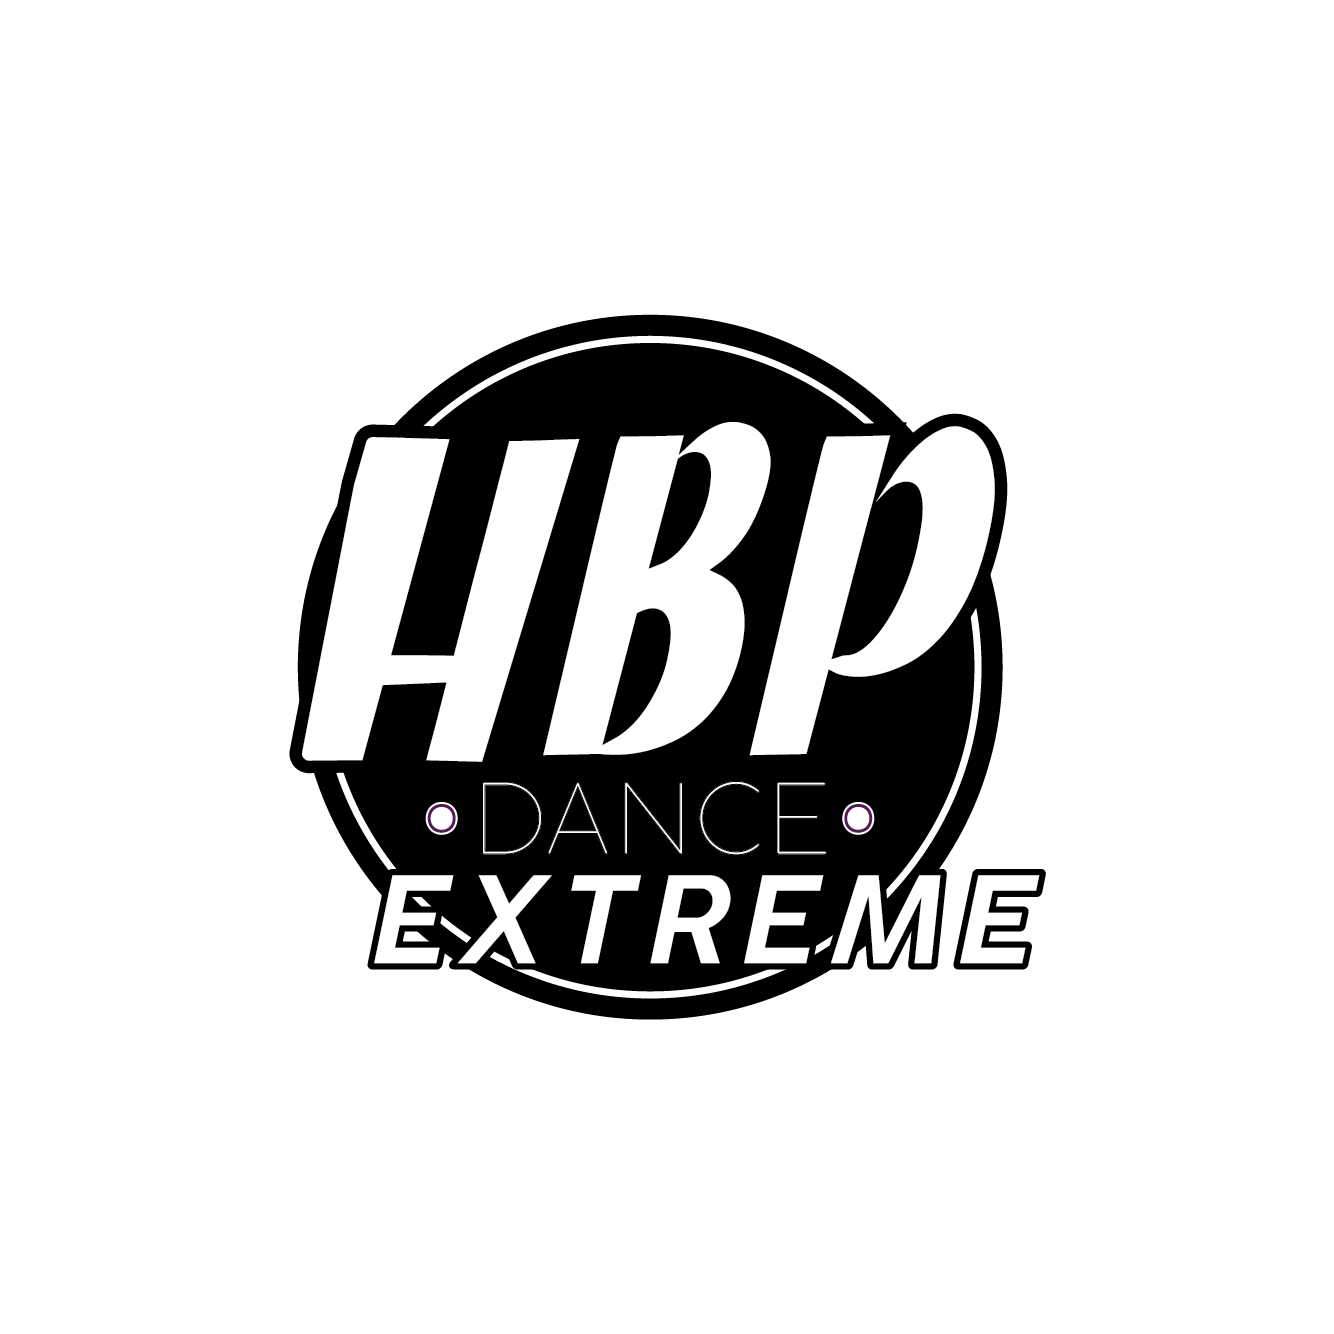 HBP Dance Extreme